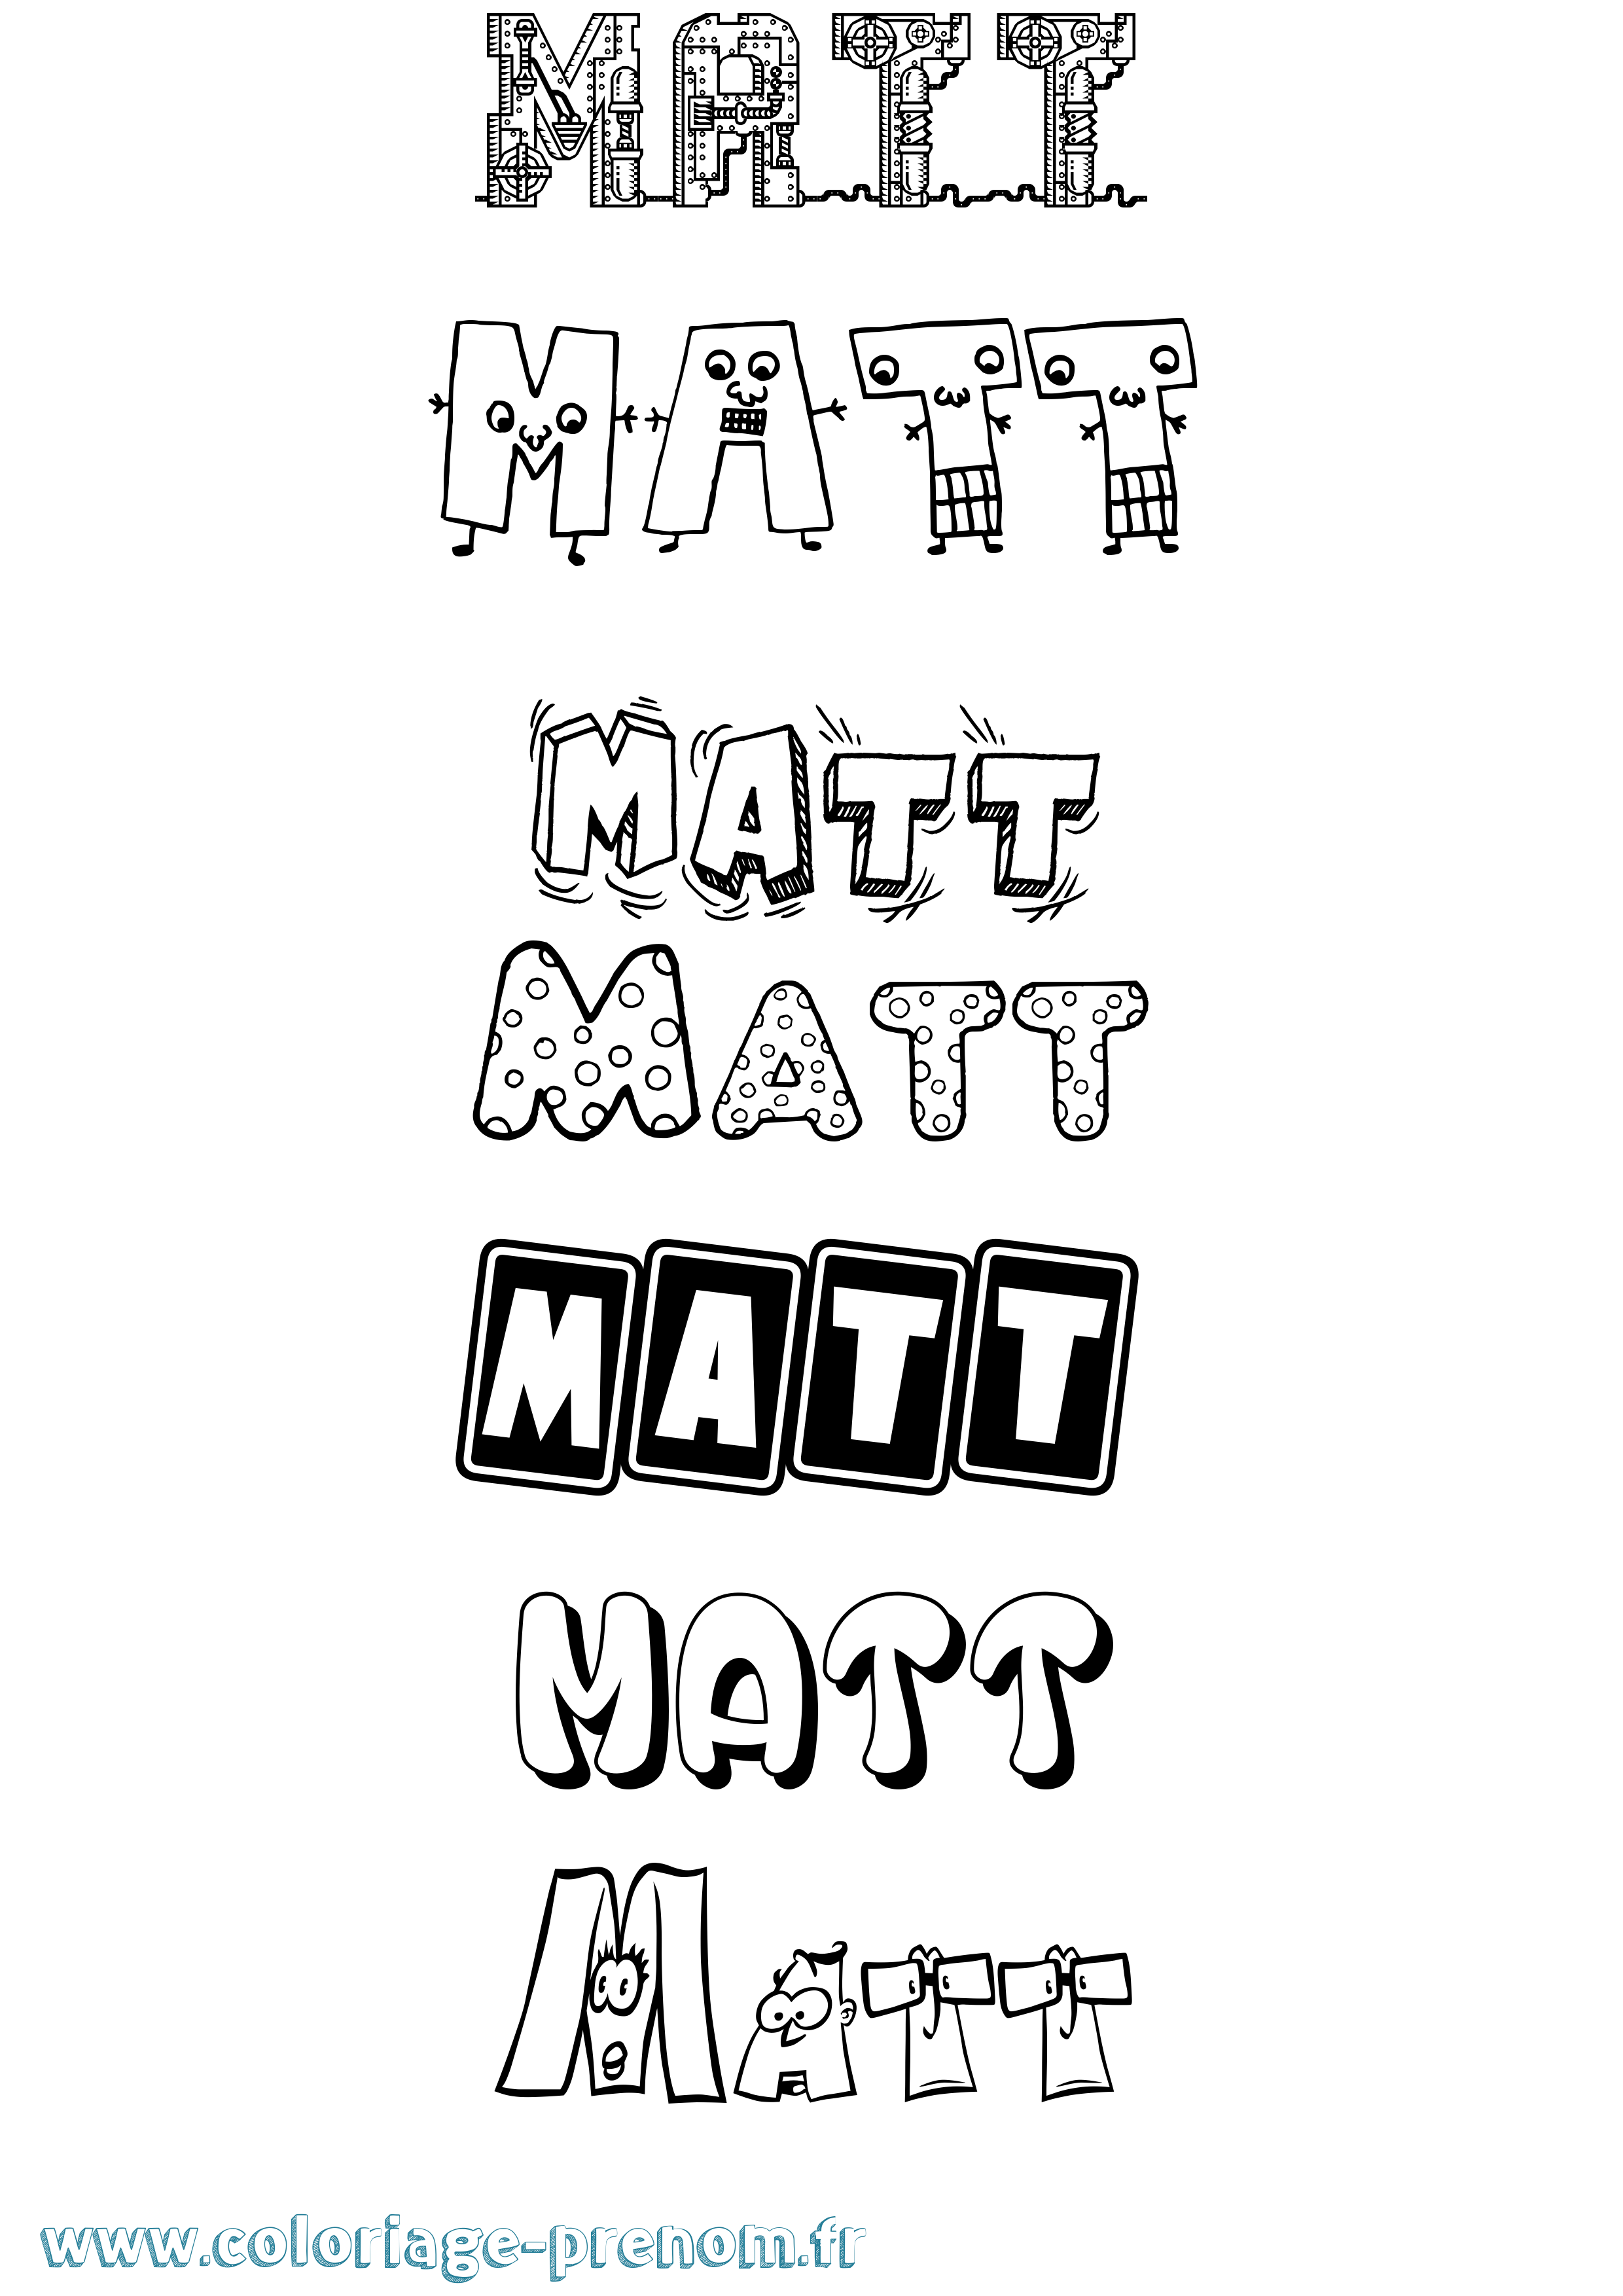 Coloriage prénom Matt Fun